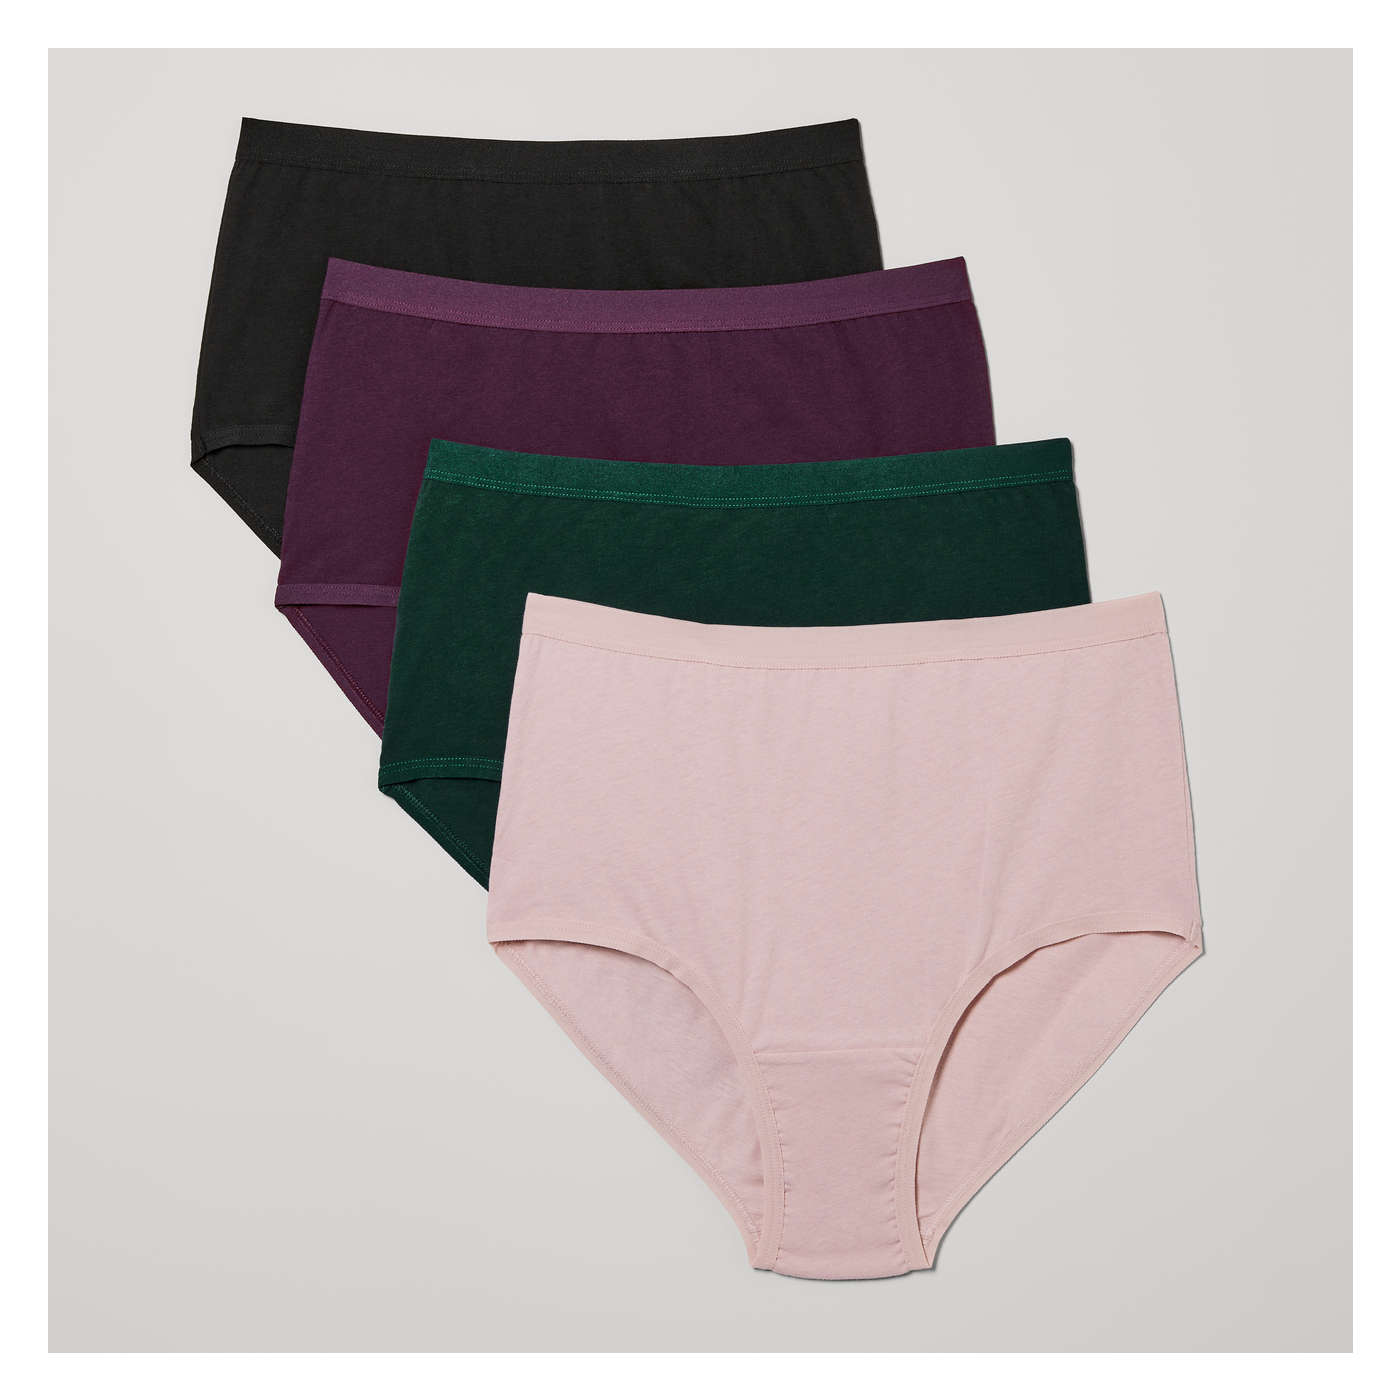 Body4Real Organic Clothing 100% Cotton Women's Panty Ladies Underwear